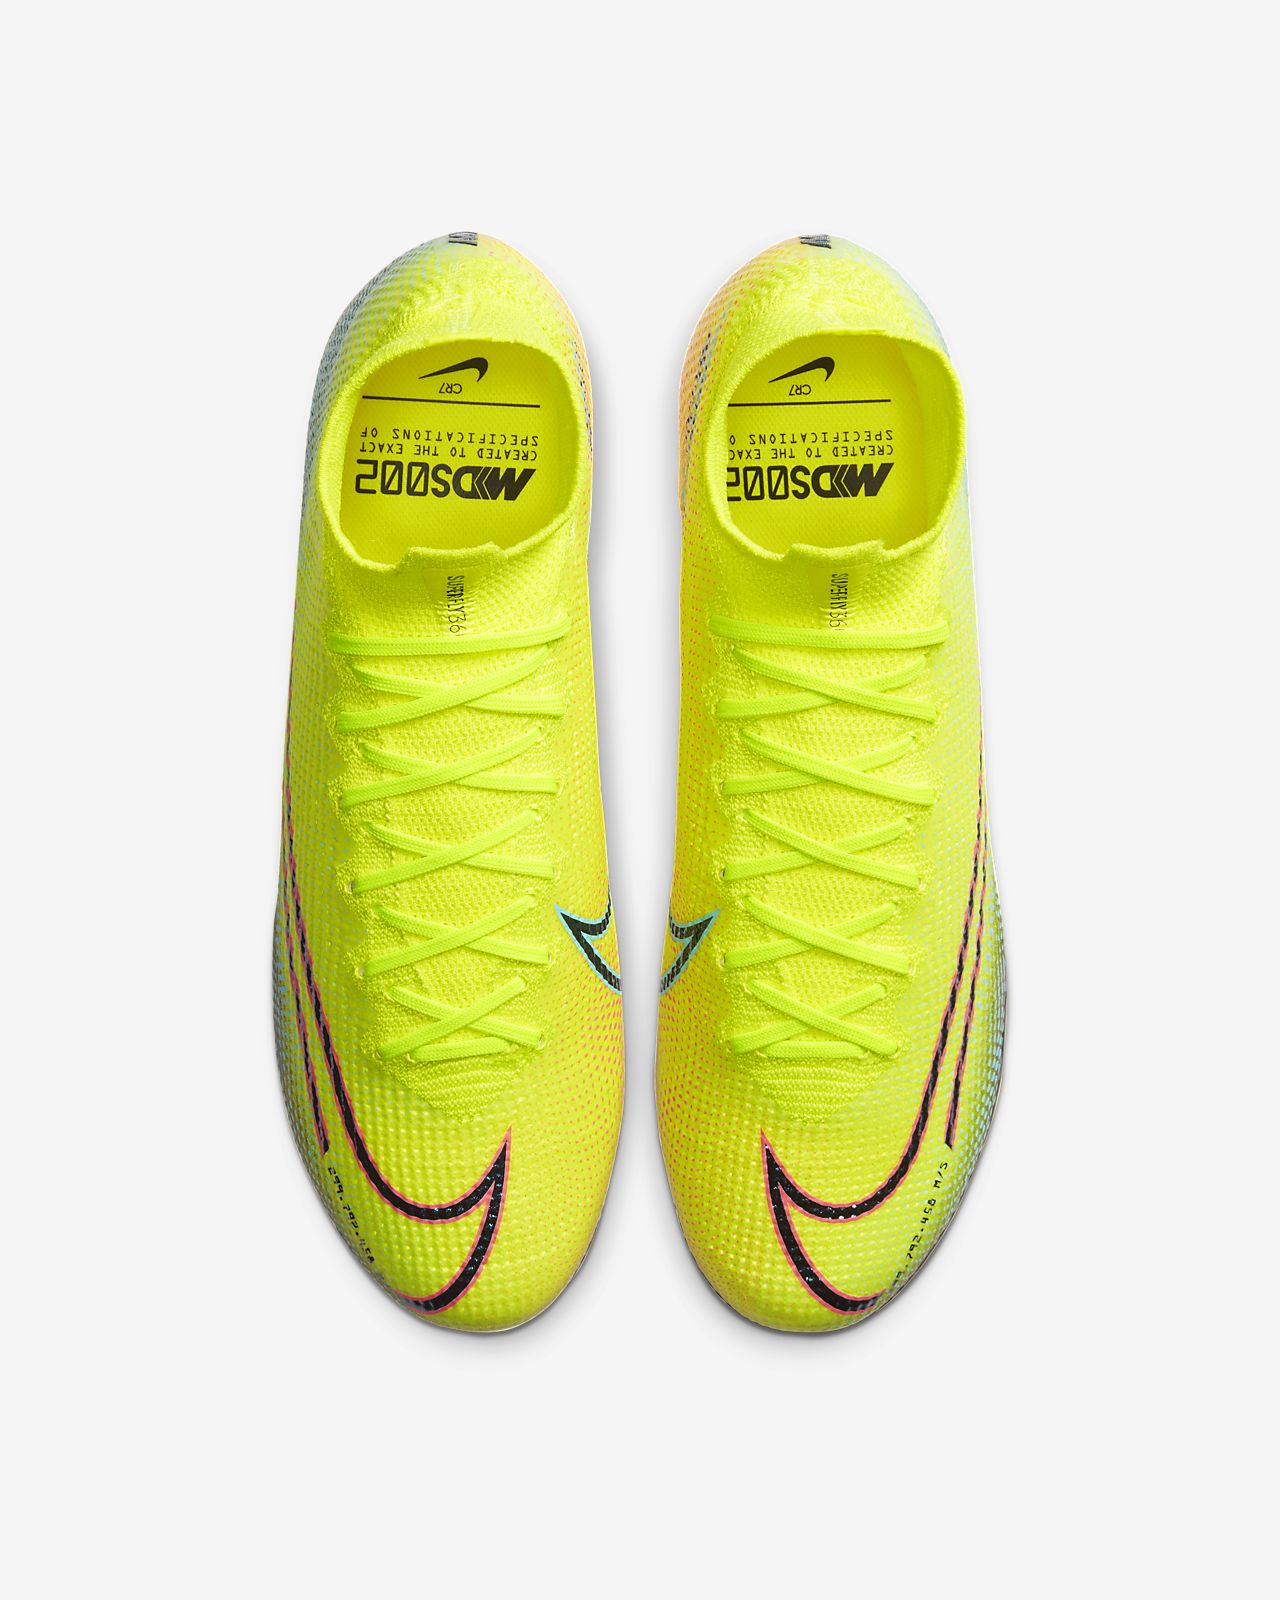 Football shoes Nike Superfly 7 Academy SG Pro Ac M BQ9141 001.